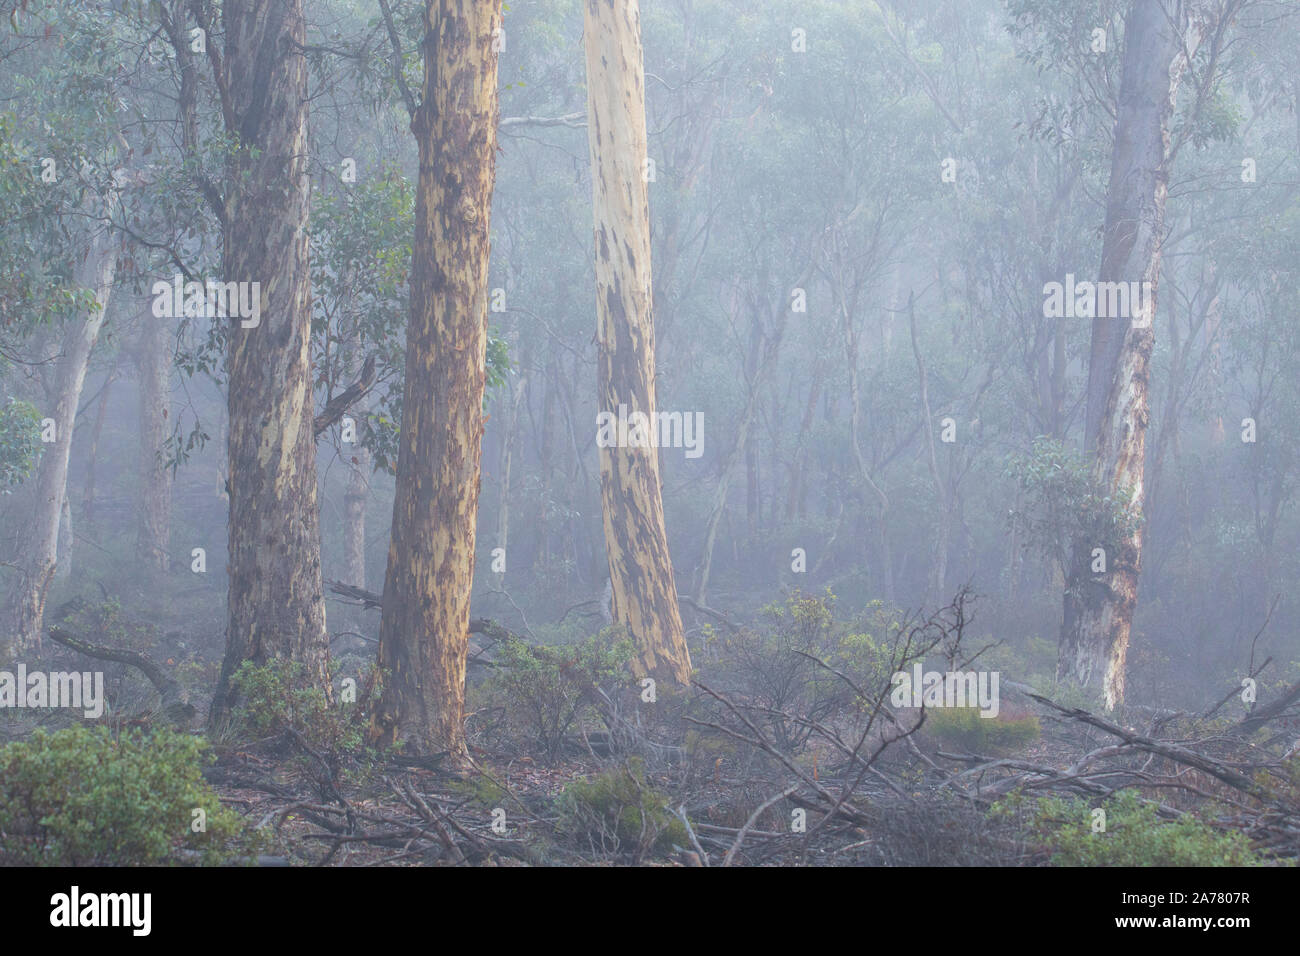 Eucalyptus wandoo woodland (wandoo) et de la brume dans la forêt d'état de Dryandra, Australie occidentale Banque D'Images